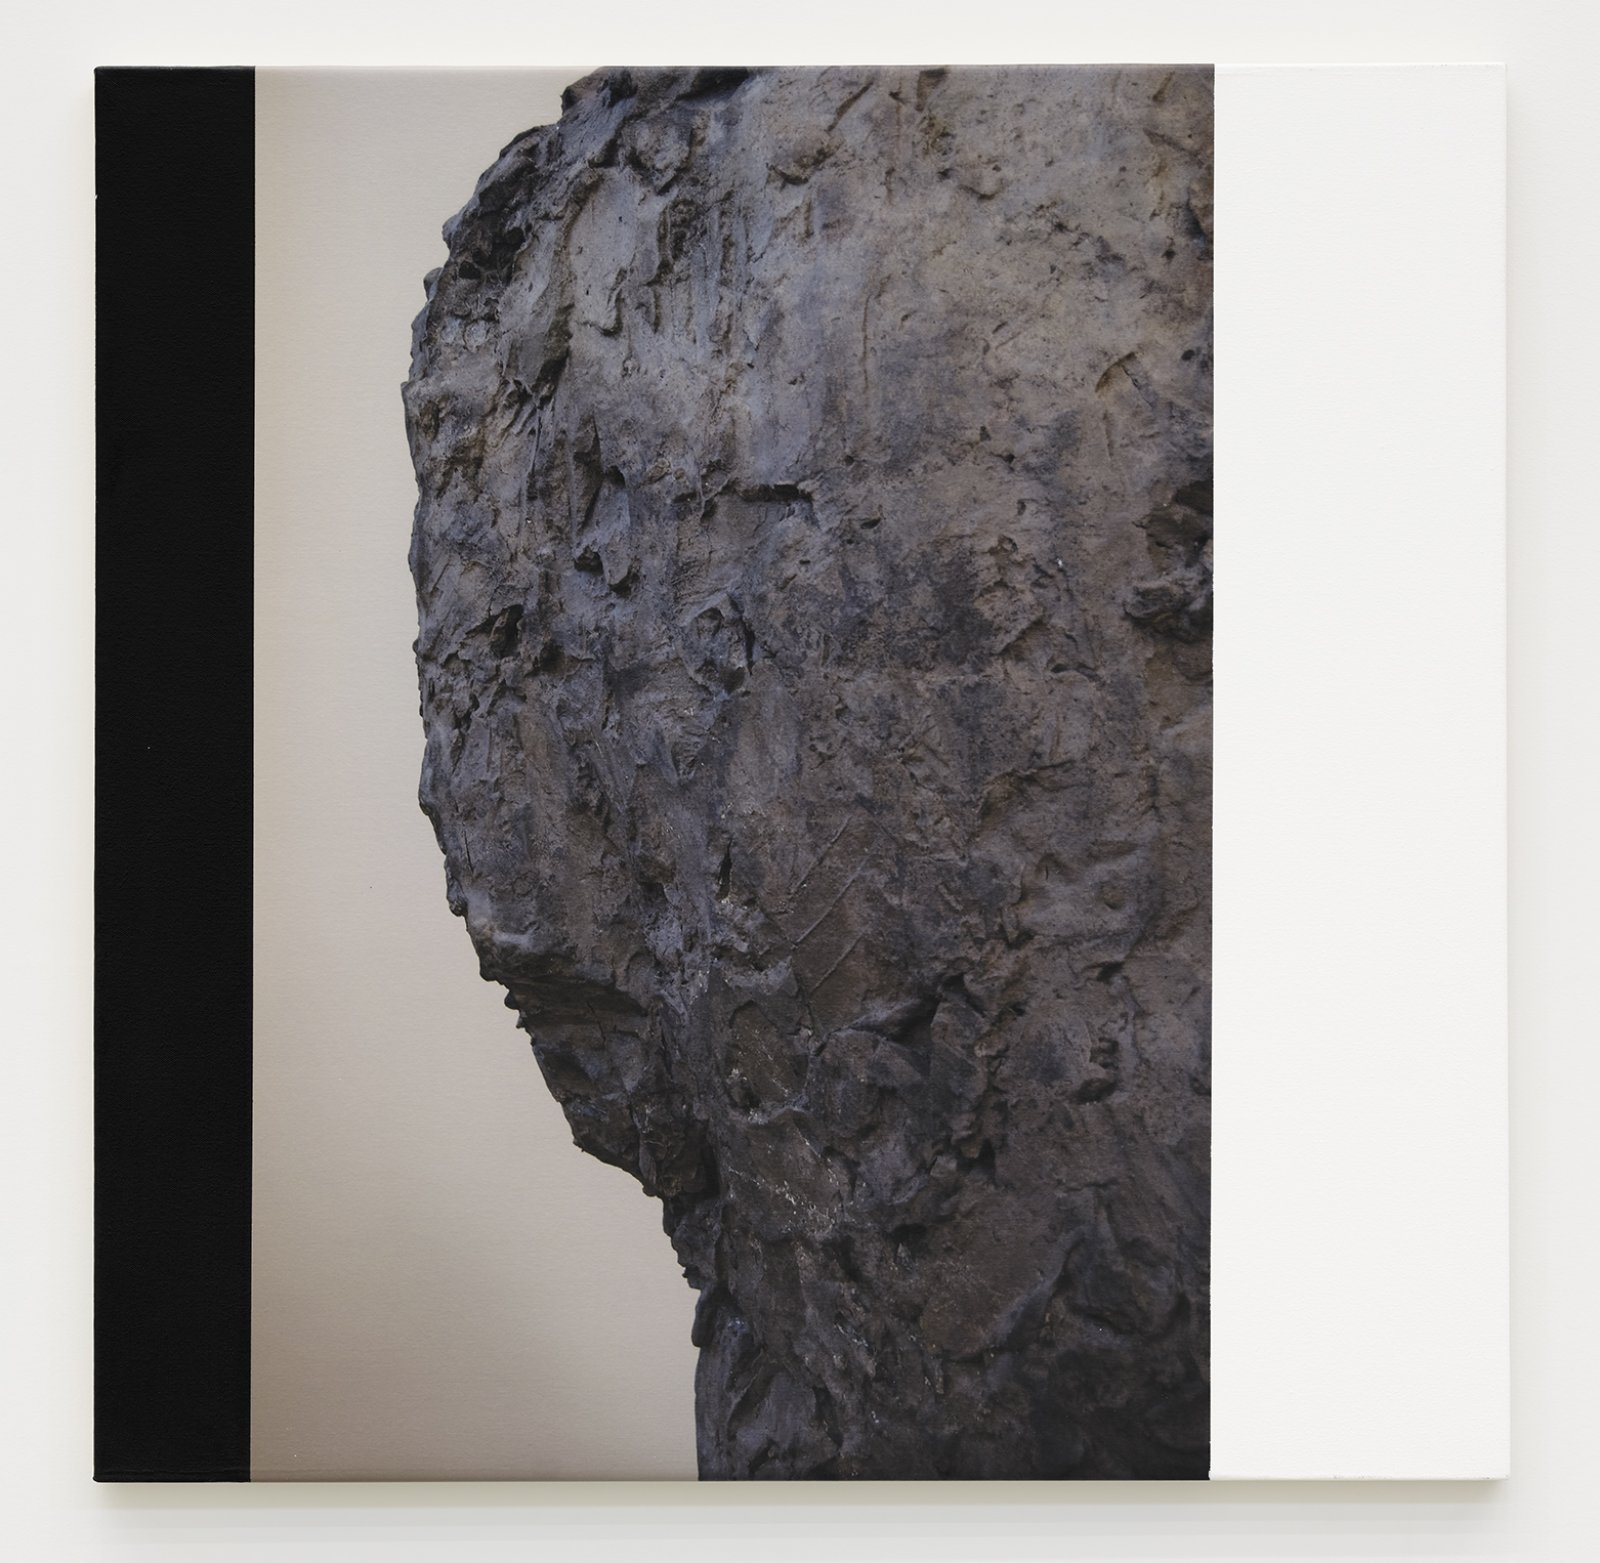 Ian Wallace, Untitled (The Hans Josephsohn Series), 2009, photolaminate and acrylic on canvas, triptych, each 36 x 36 in. (92 x 92 cm)